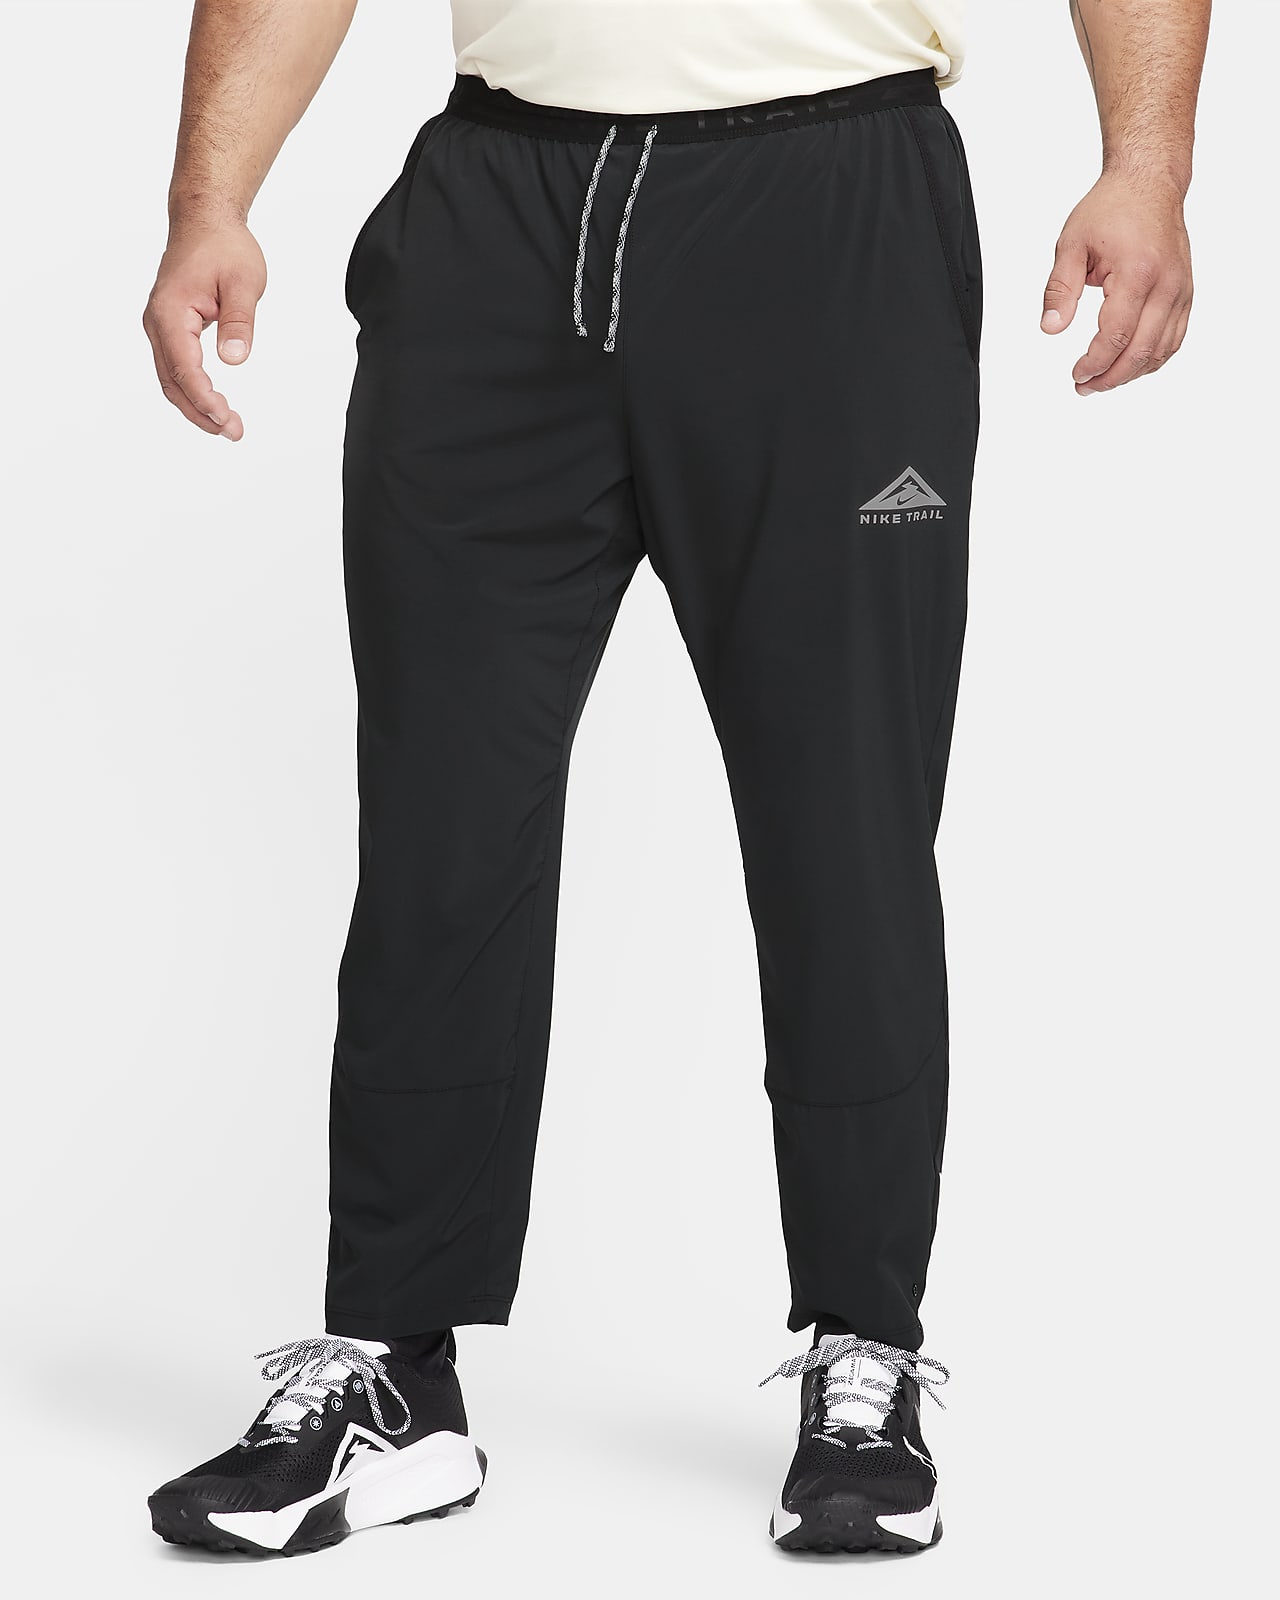 Jogging Nike Dri-Fit - Pantalons / Joggings - Les Bas - Vêtements